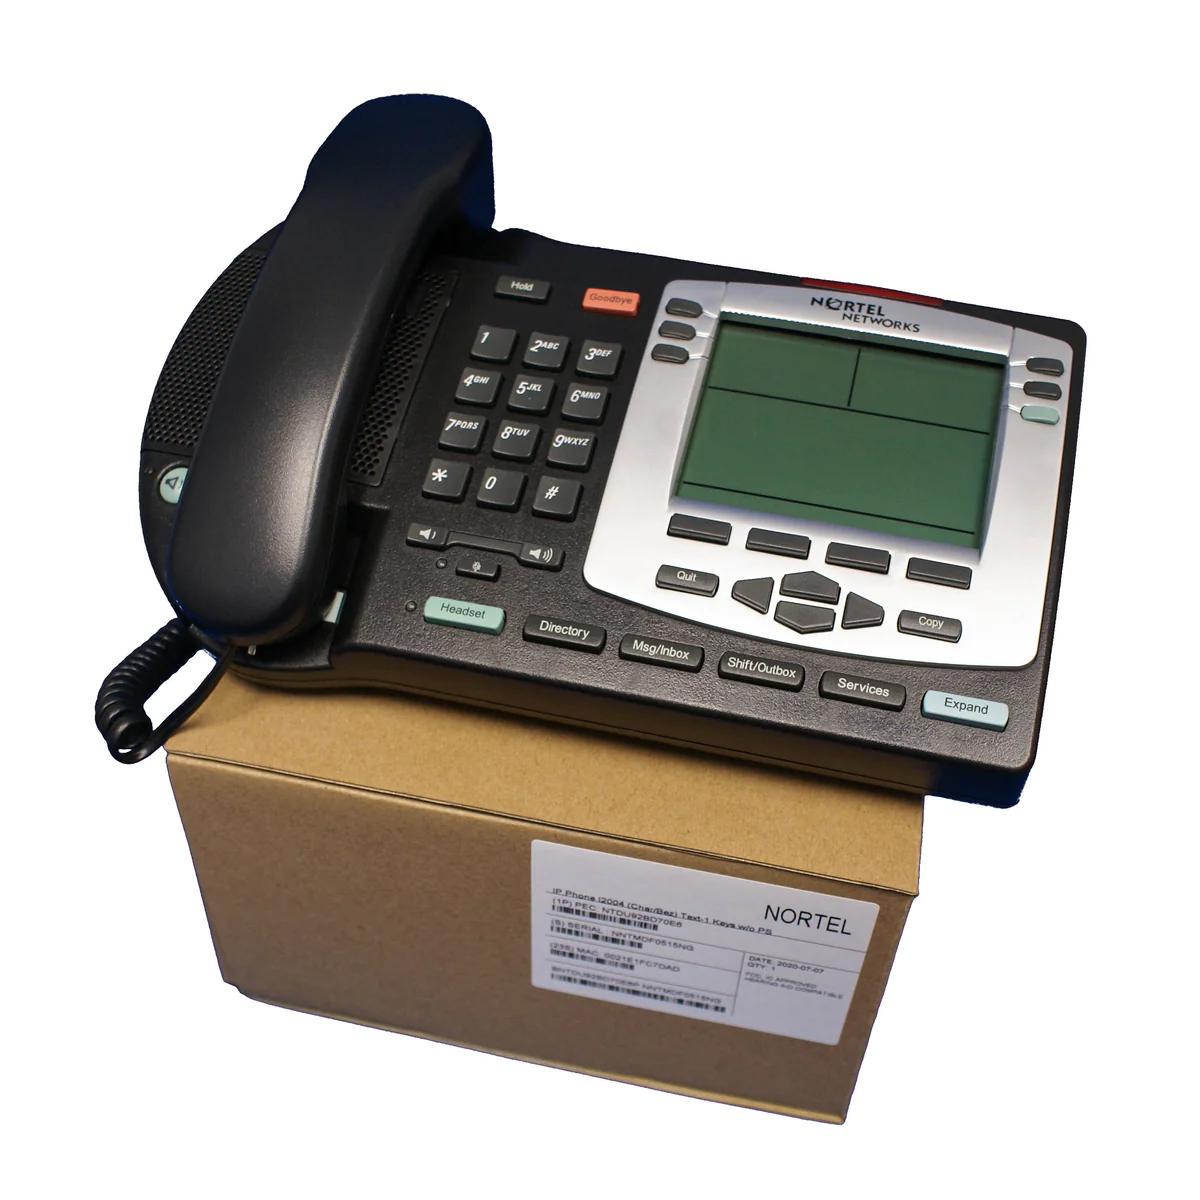 IP Phone 2004 for Nortel Communication Server 1000